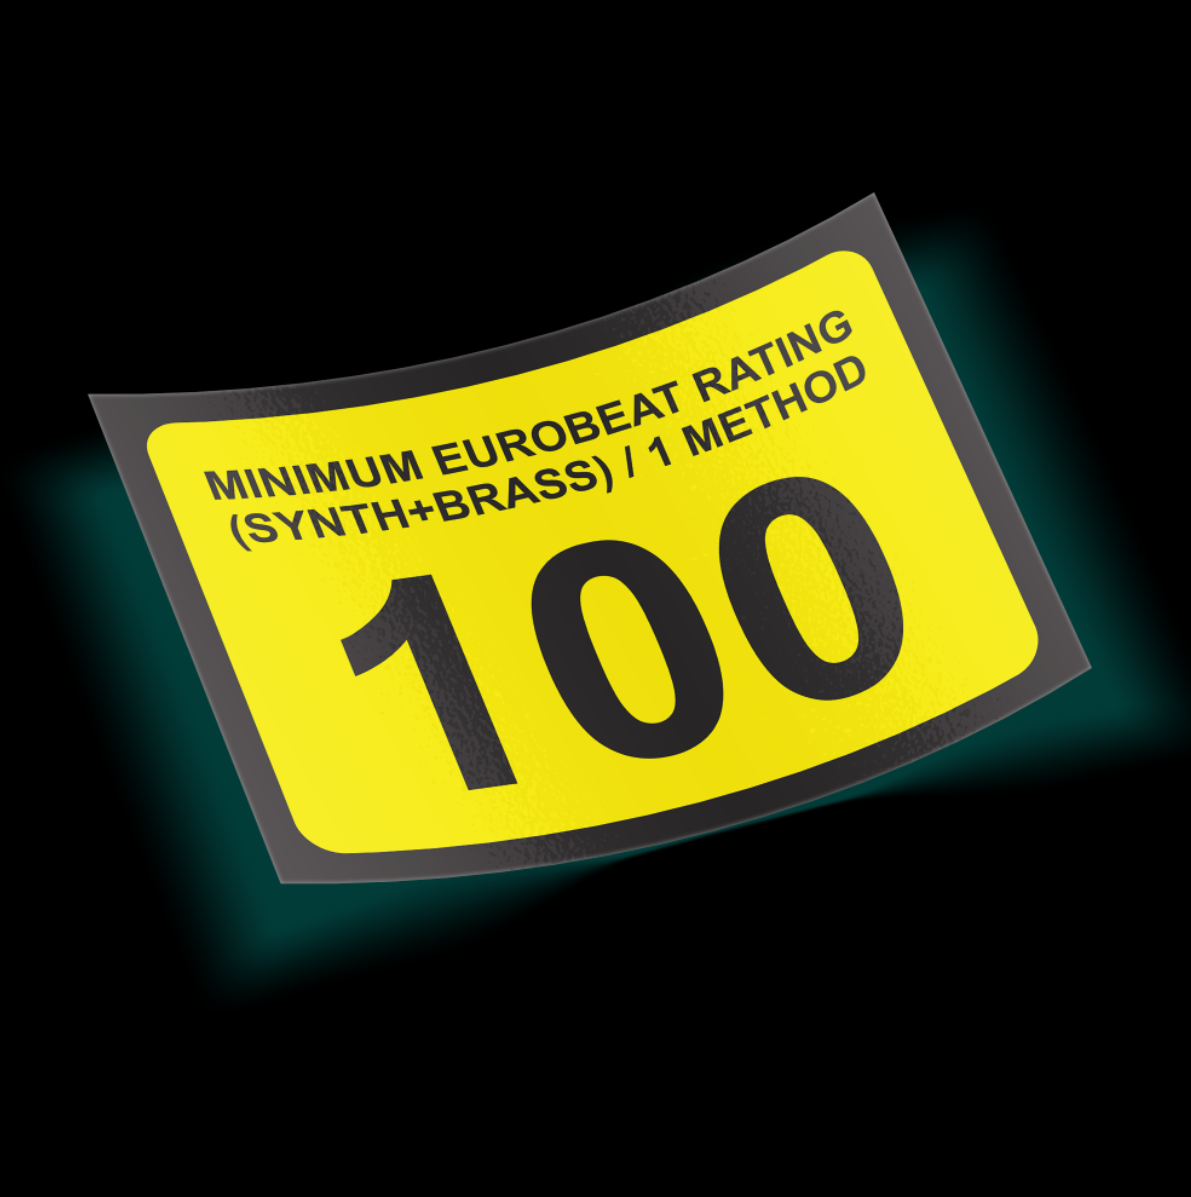 Eurobeat Rating 100